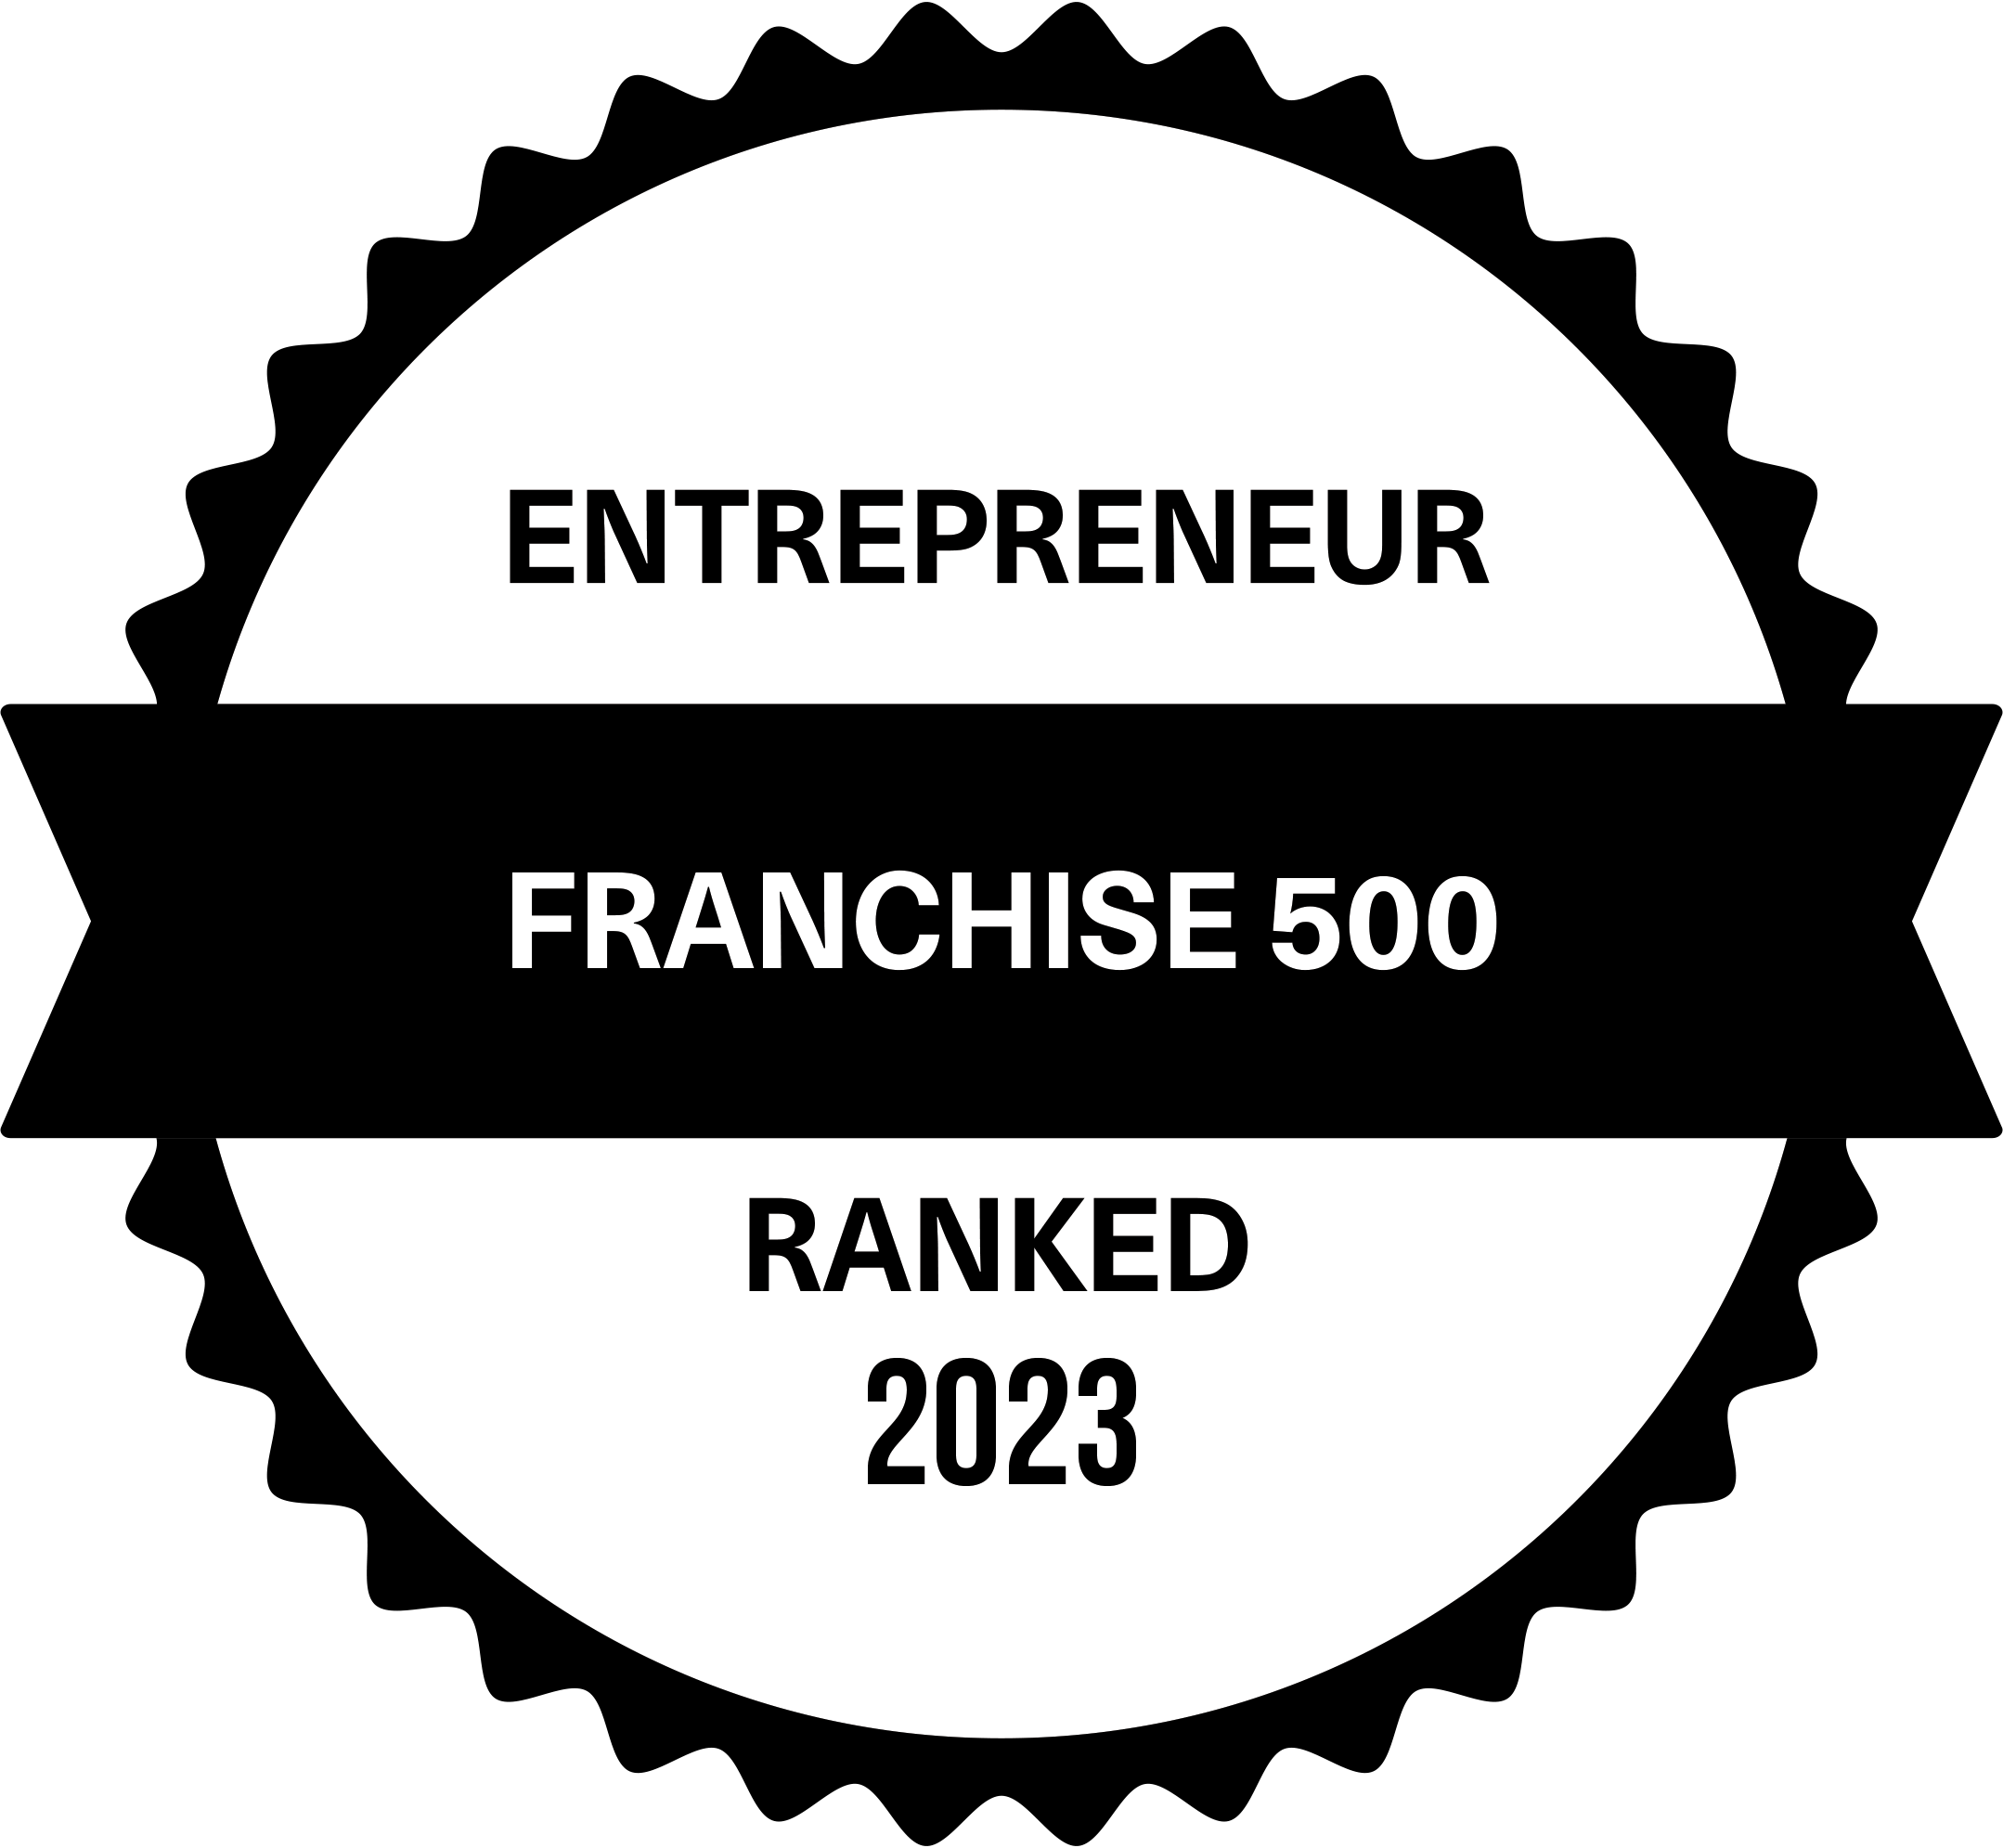 Entrepreneur Franchise 500 Ranked 2023 badge